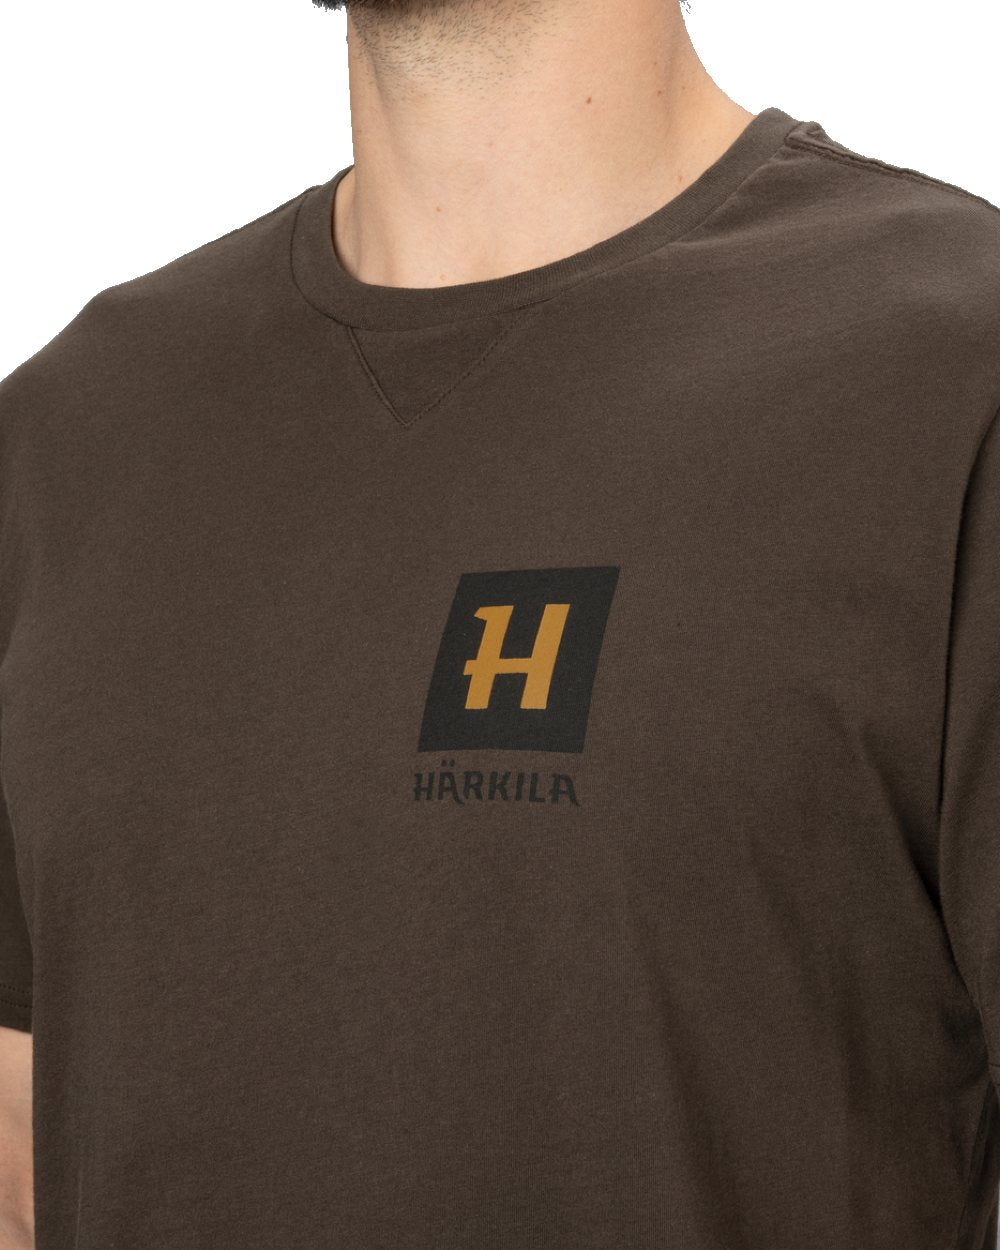 Shadow Brown coloured Harkila Gorm Short Sleeved T-Shirt on white background 